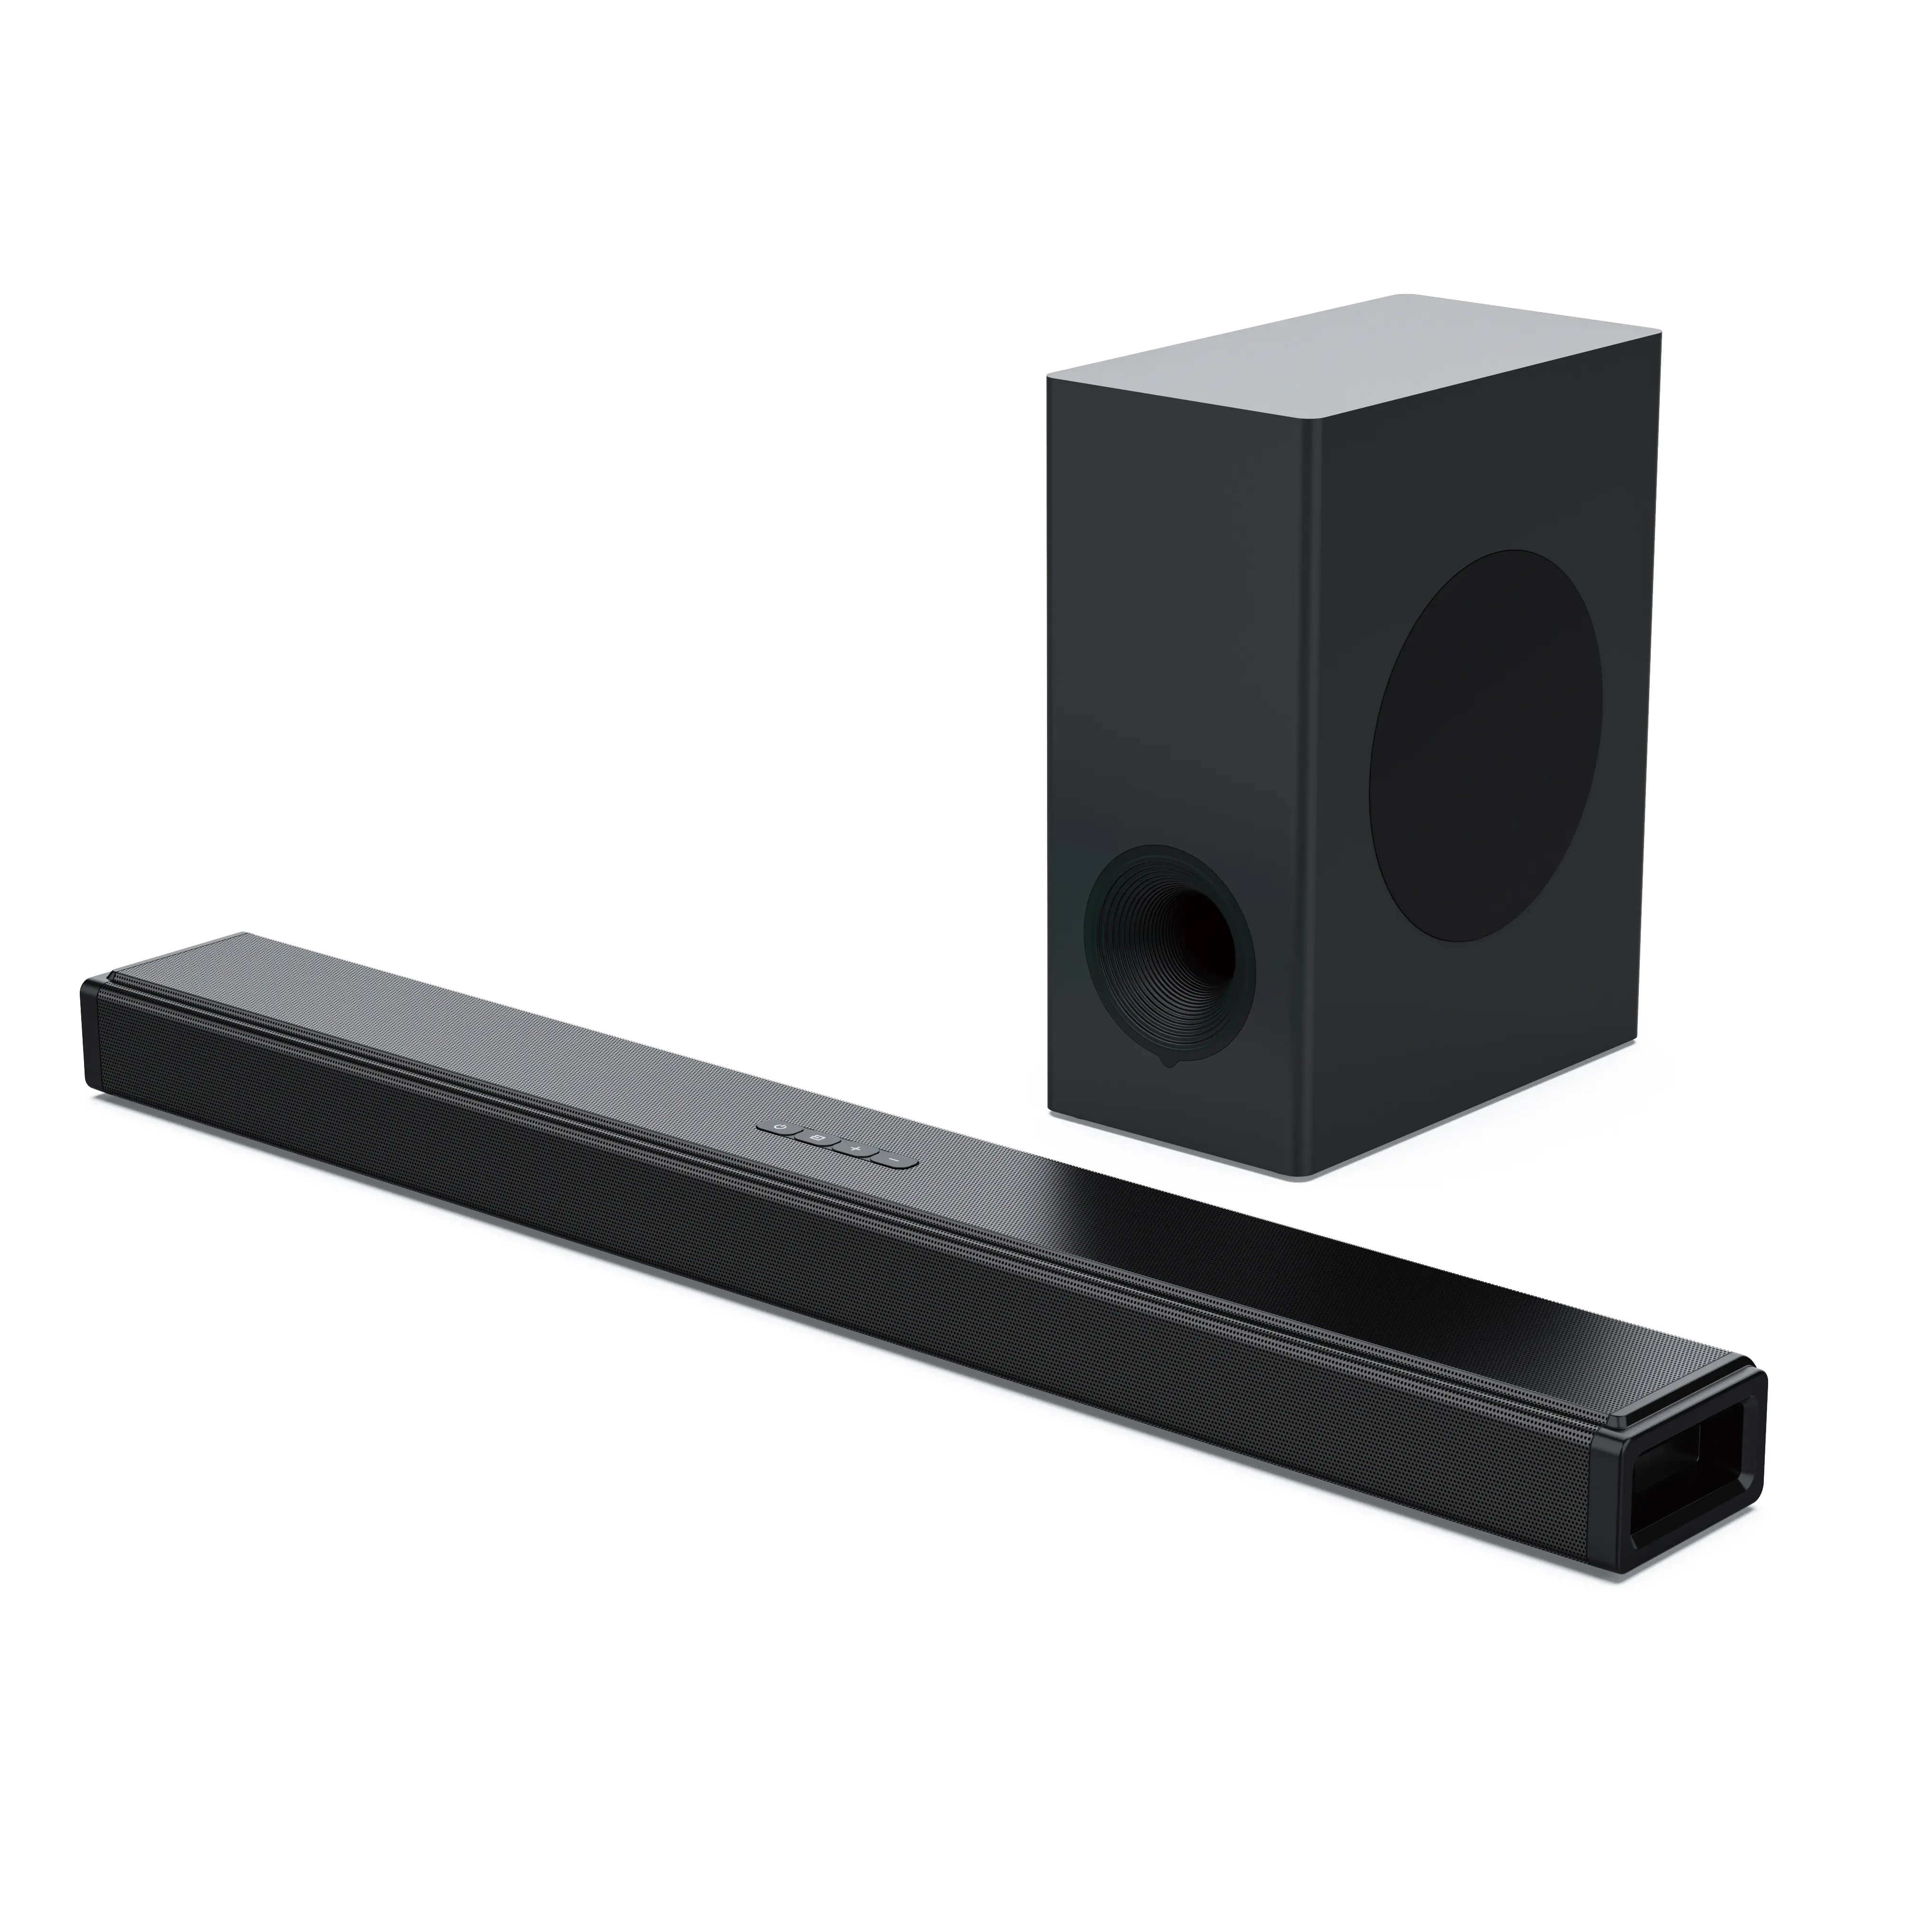 Audio Player Soundbar Speaker Subwoofer TV Sound Bar Wireless Blue Black 2.1 soundbar atmos Home Cinema Speaker System Wireless